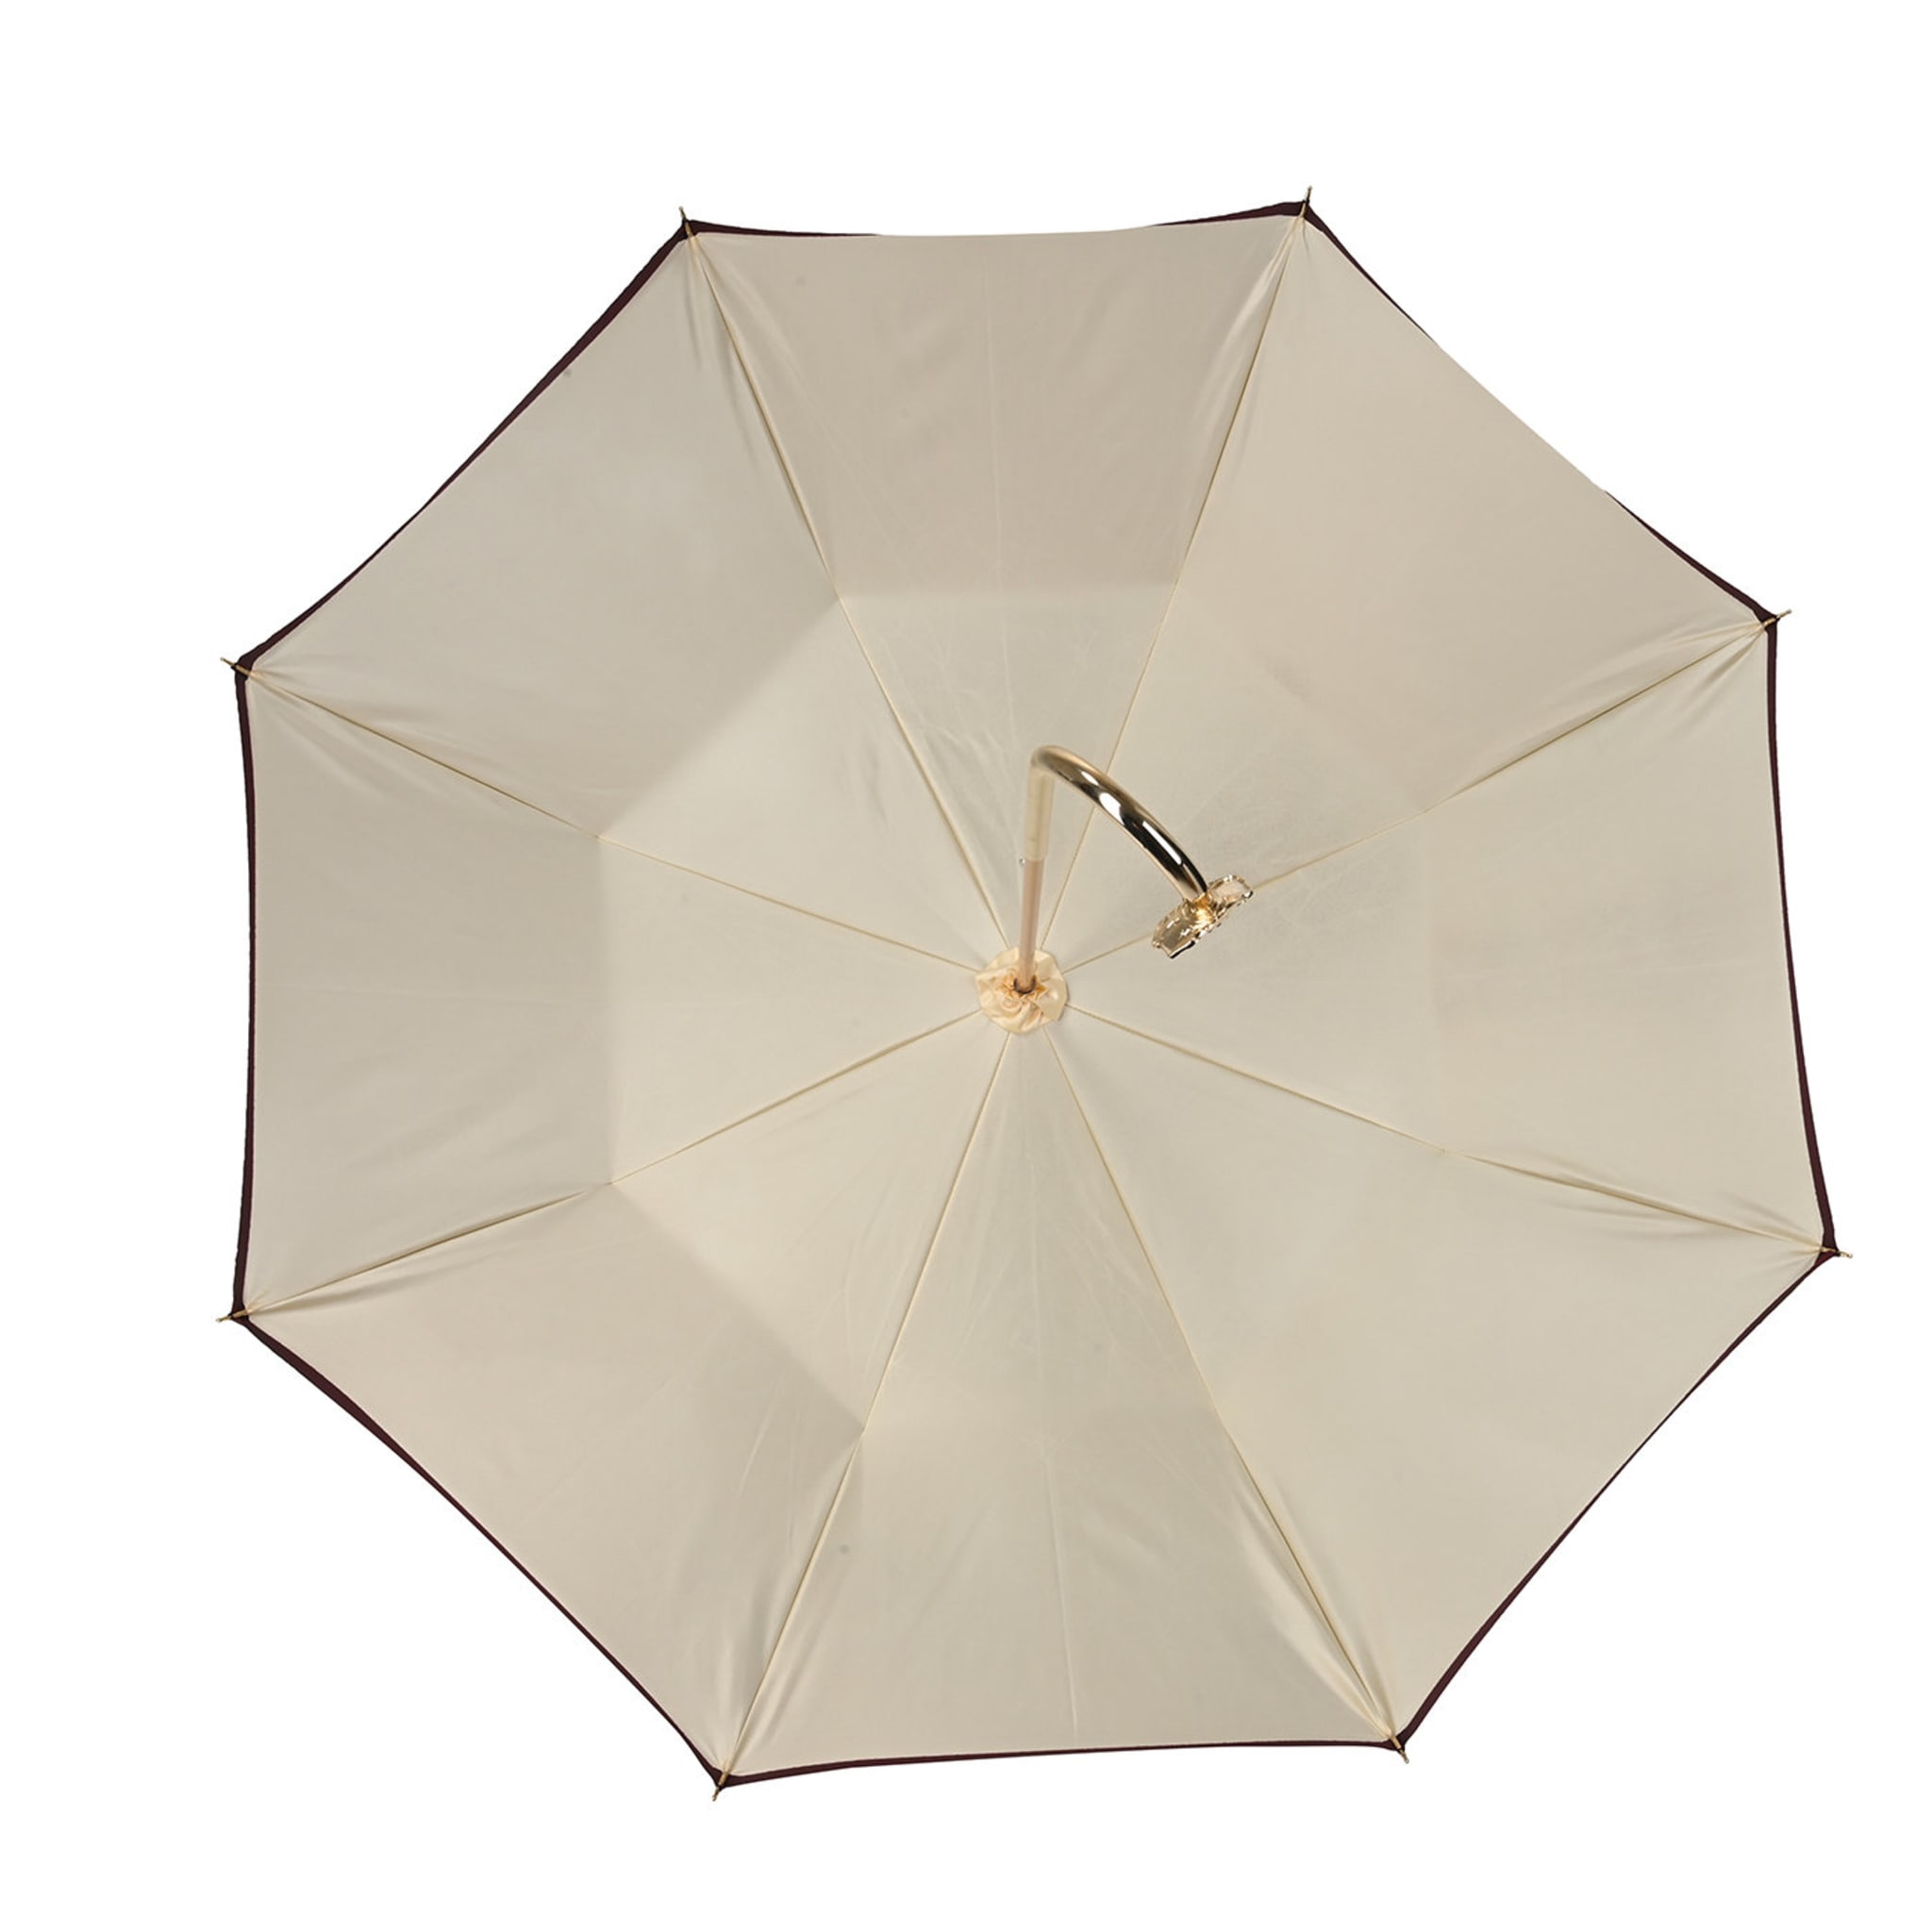 Burgundy and Beige Umbrella with Jeweled Handle - Alternative view 2